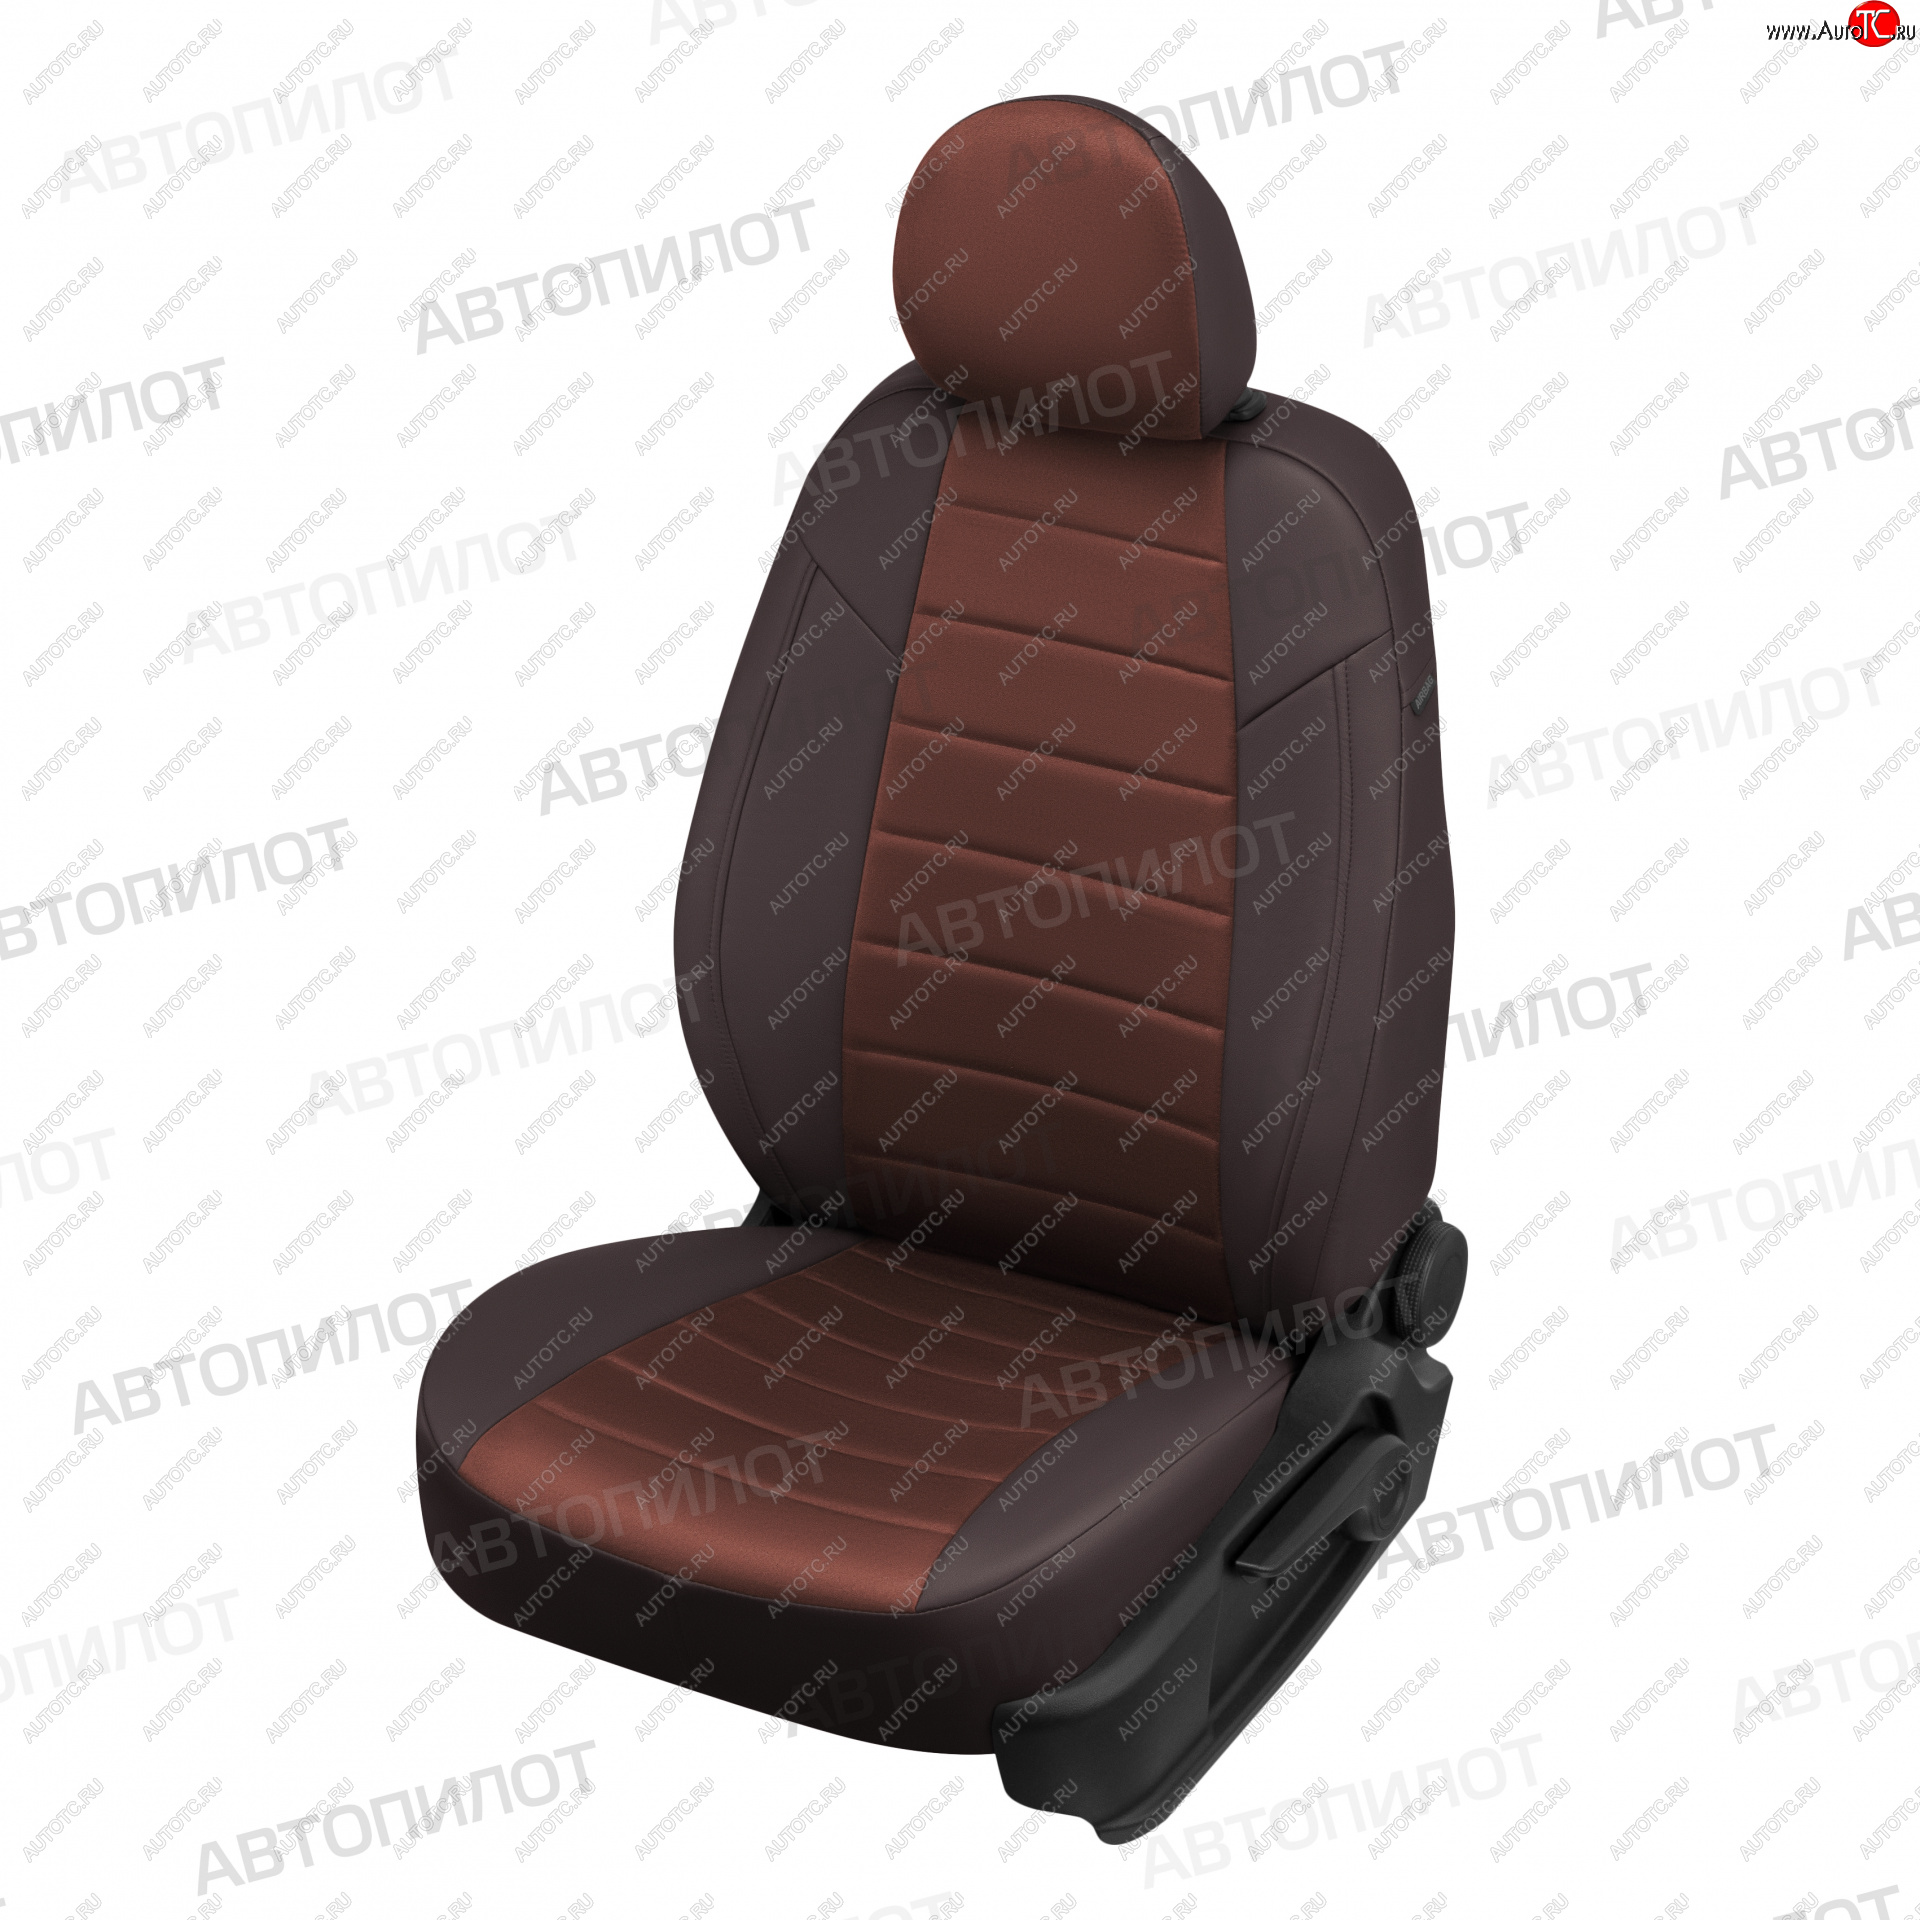 21 599 р. Чехлы сидений (9 мест, экокожа/алькантара) Автопилот  Ford Transit  4 (2014-2024) (шоколад)